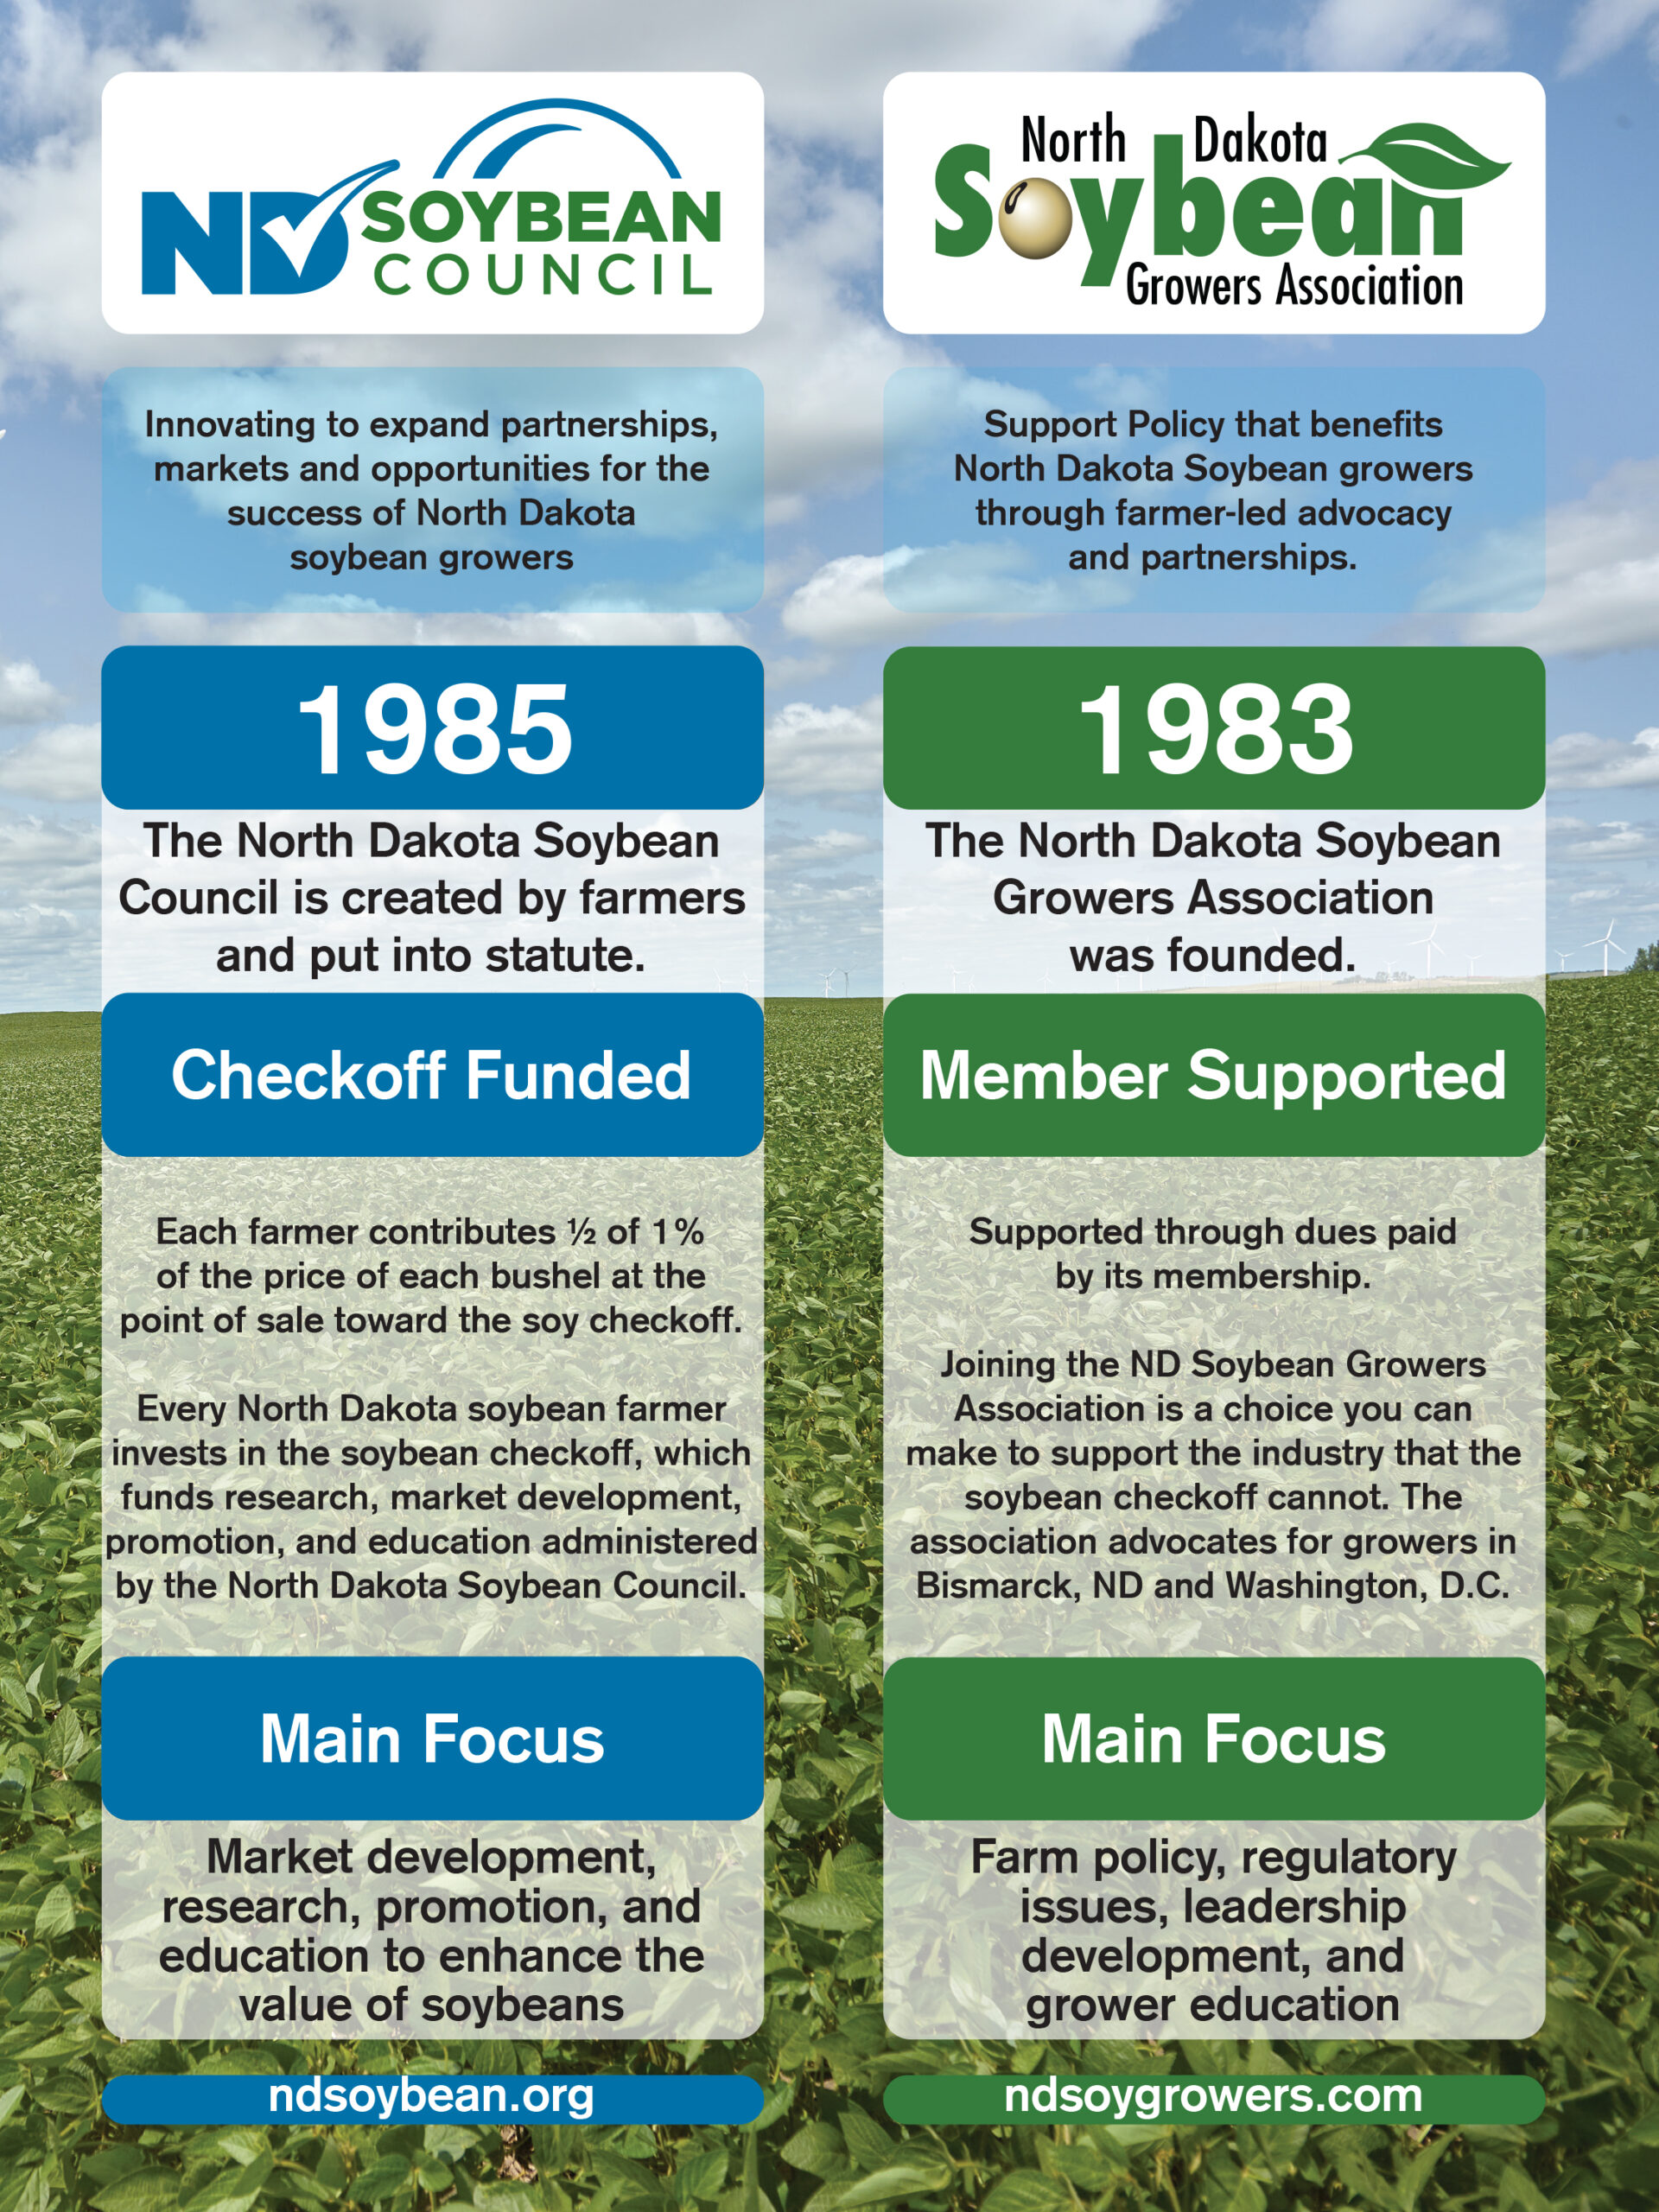 North Dakota Soybean Council and the North Dakota Soybean Growers Association